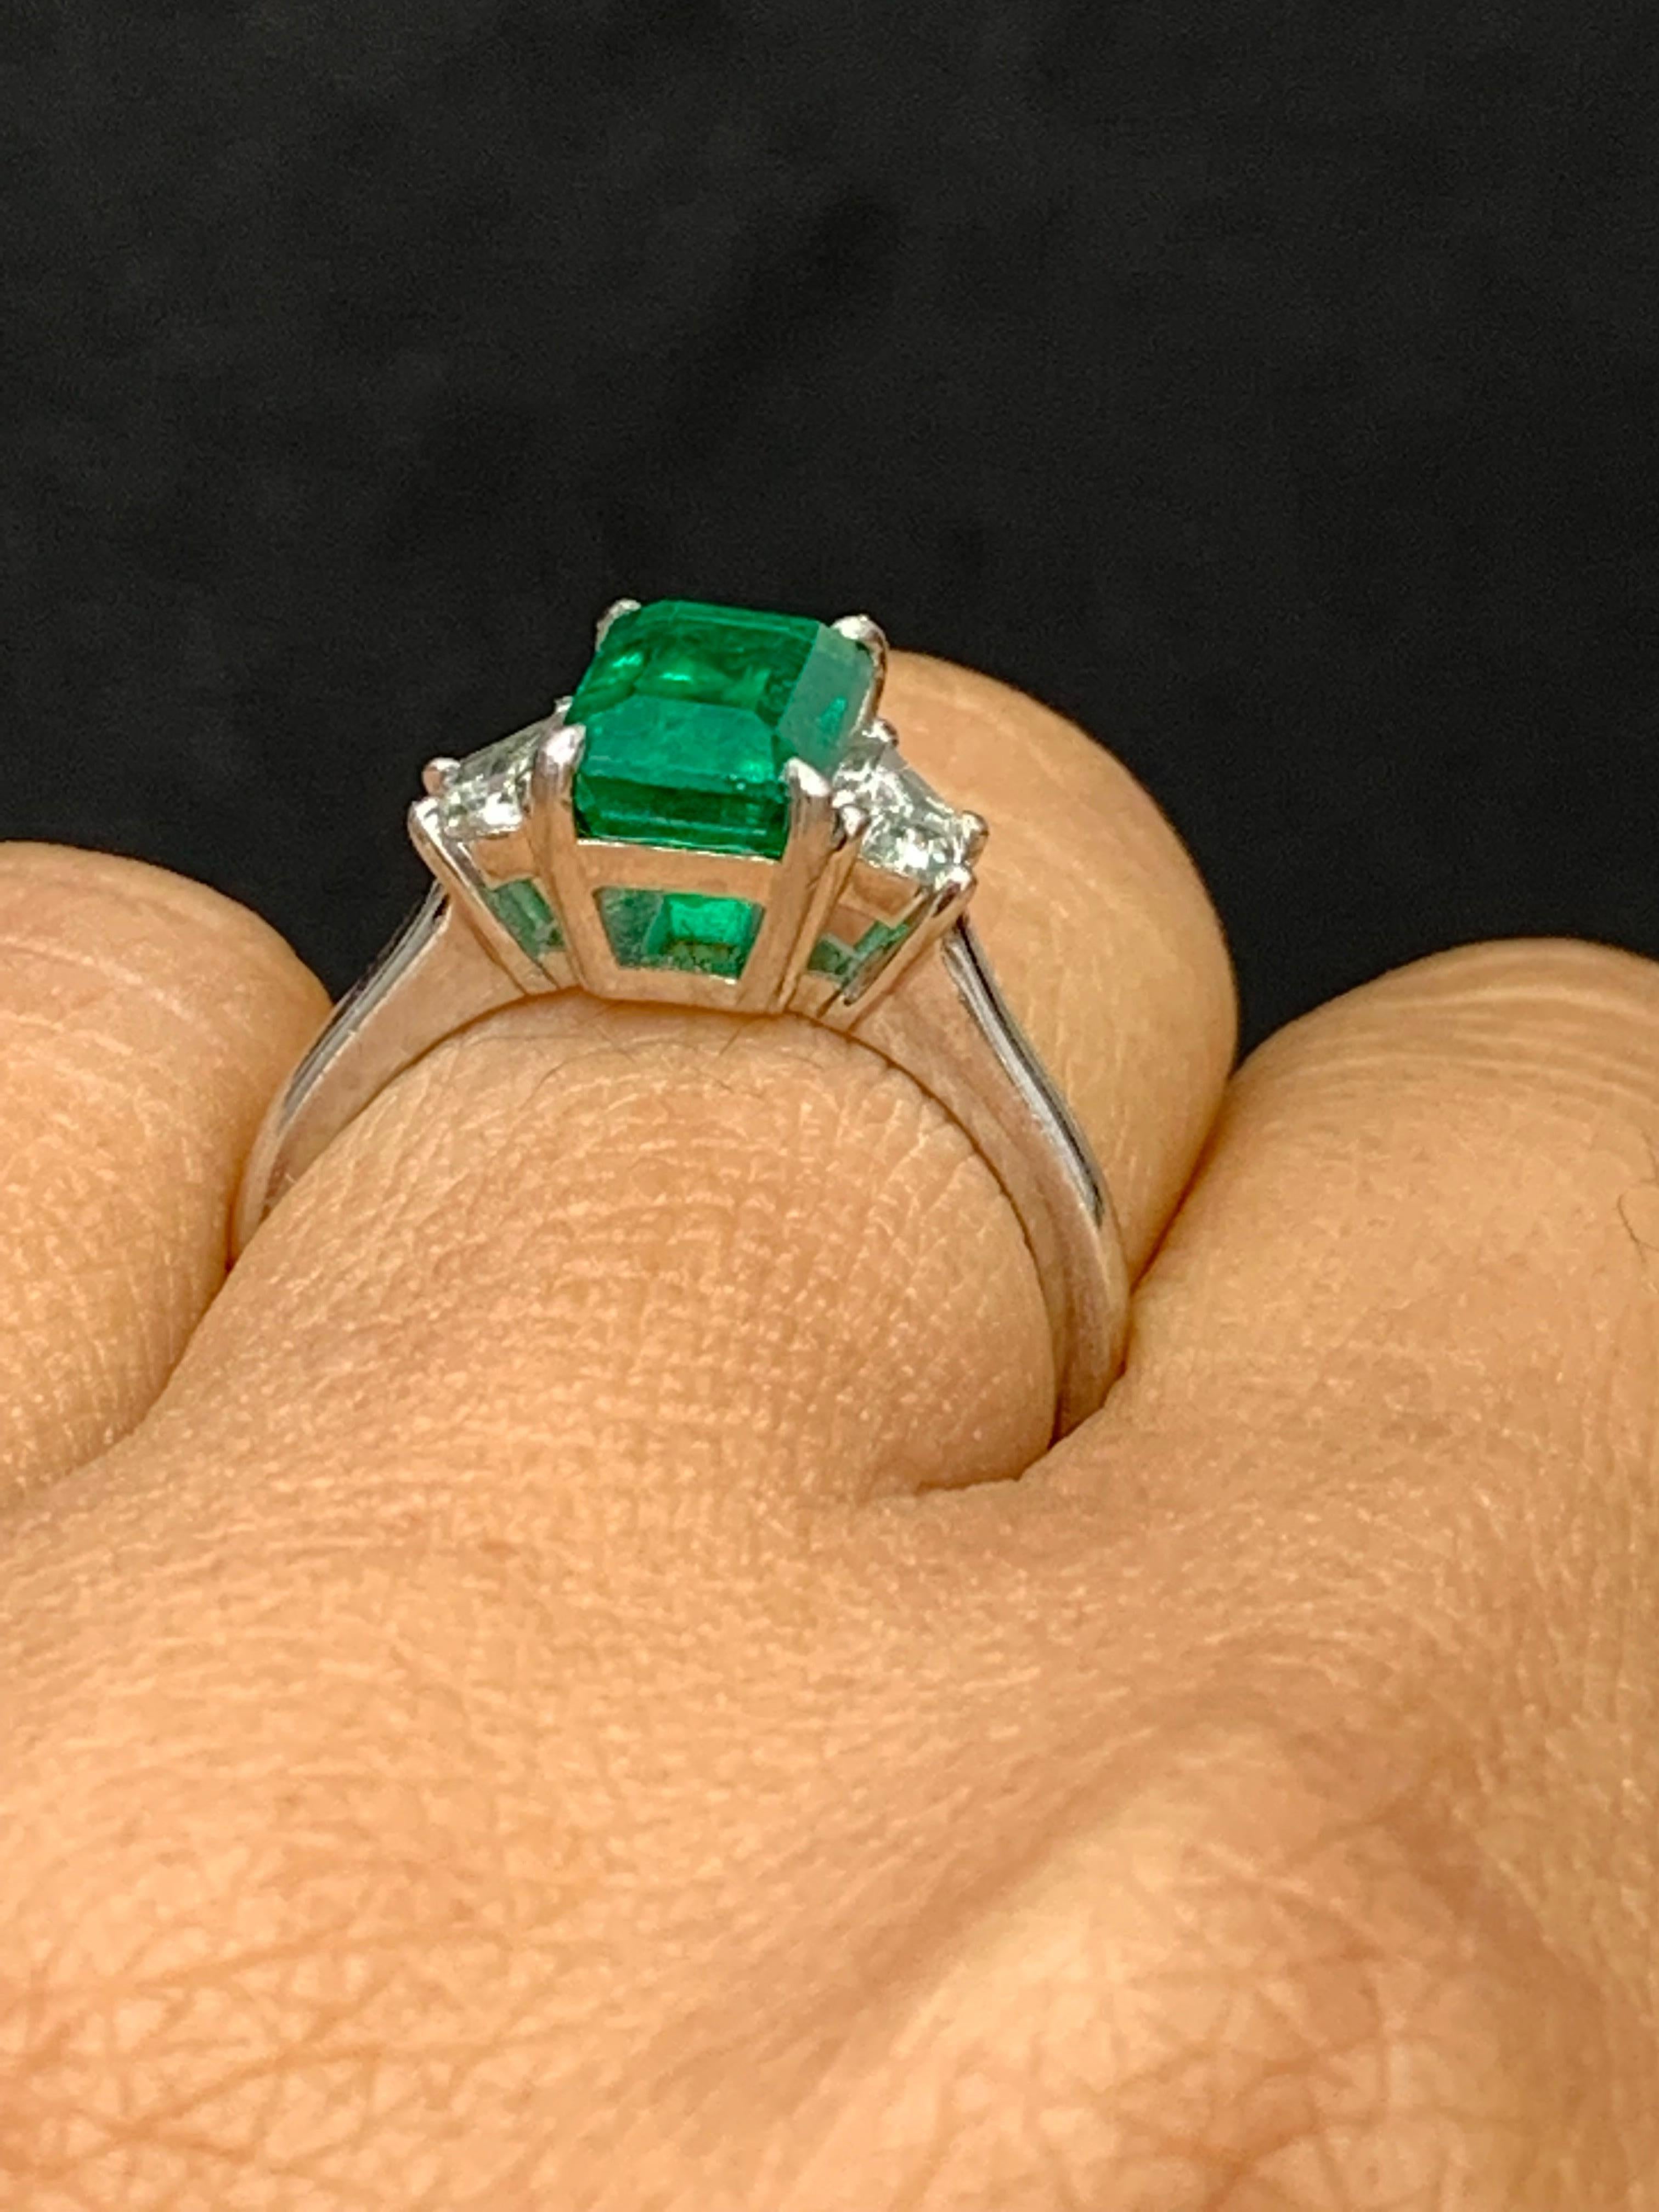 Certified 2.08 Carat Emerald Cut Emerald Diamond Ring in Platinum For Sale 2